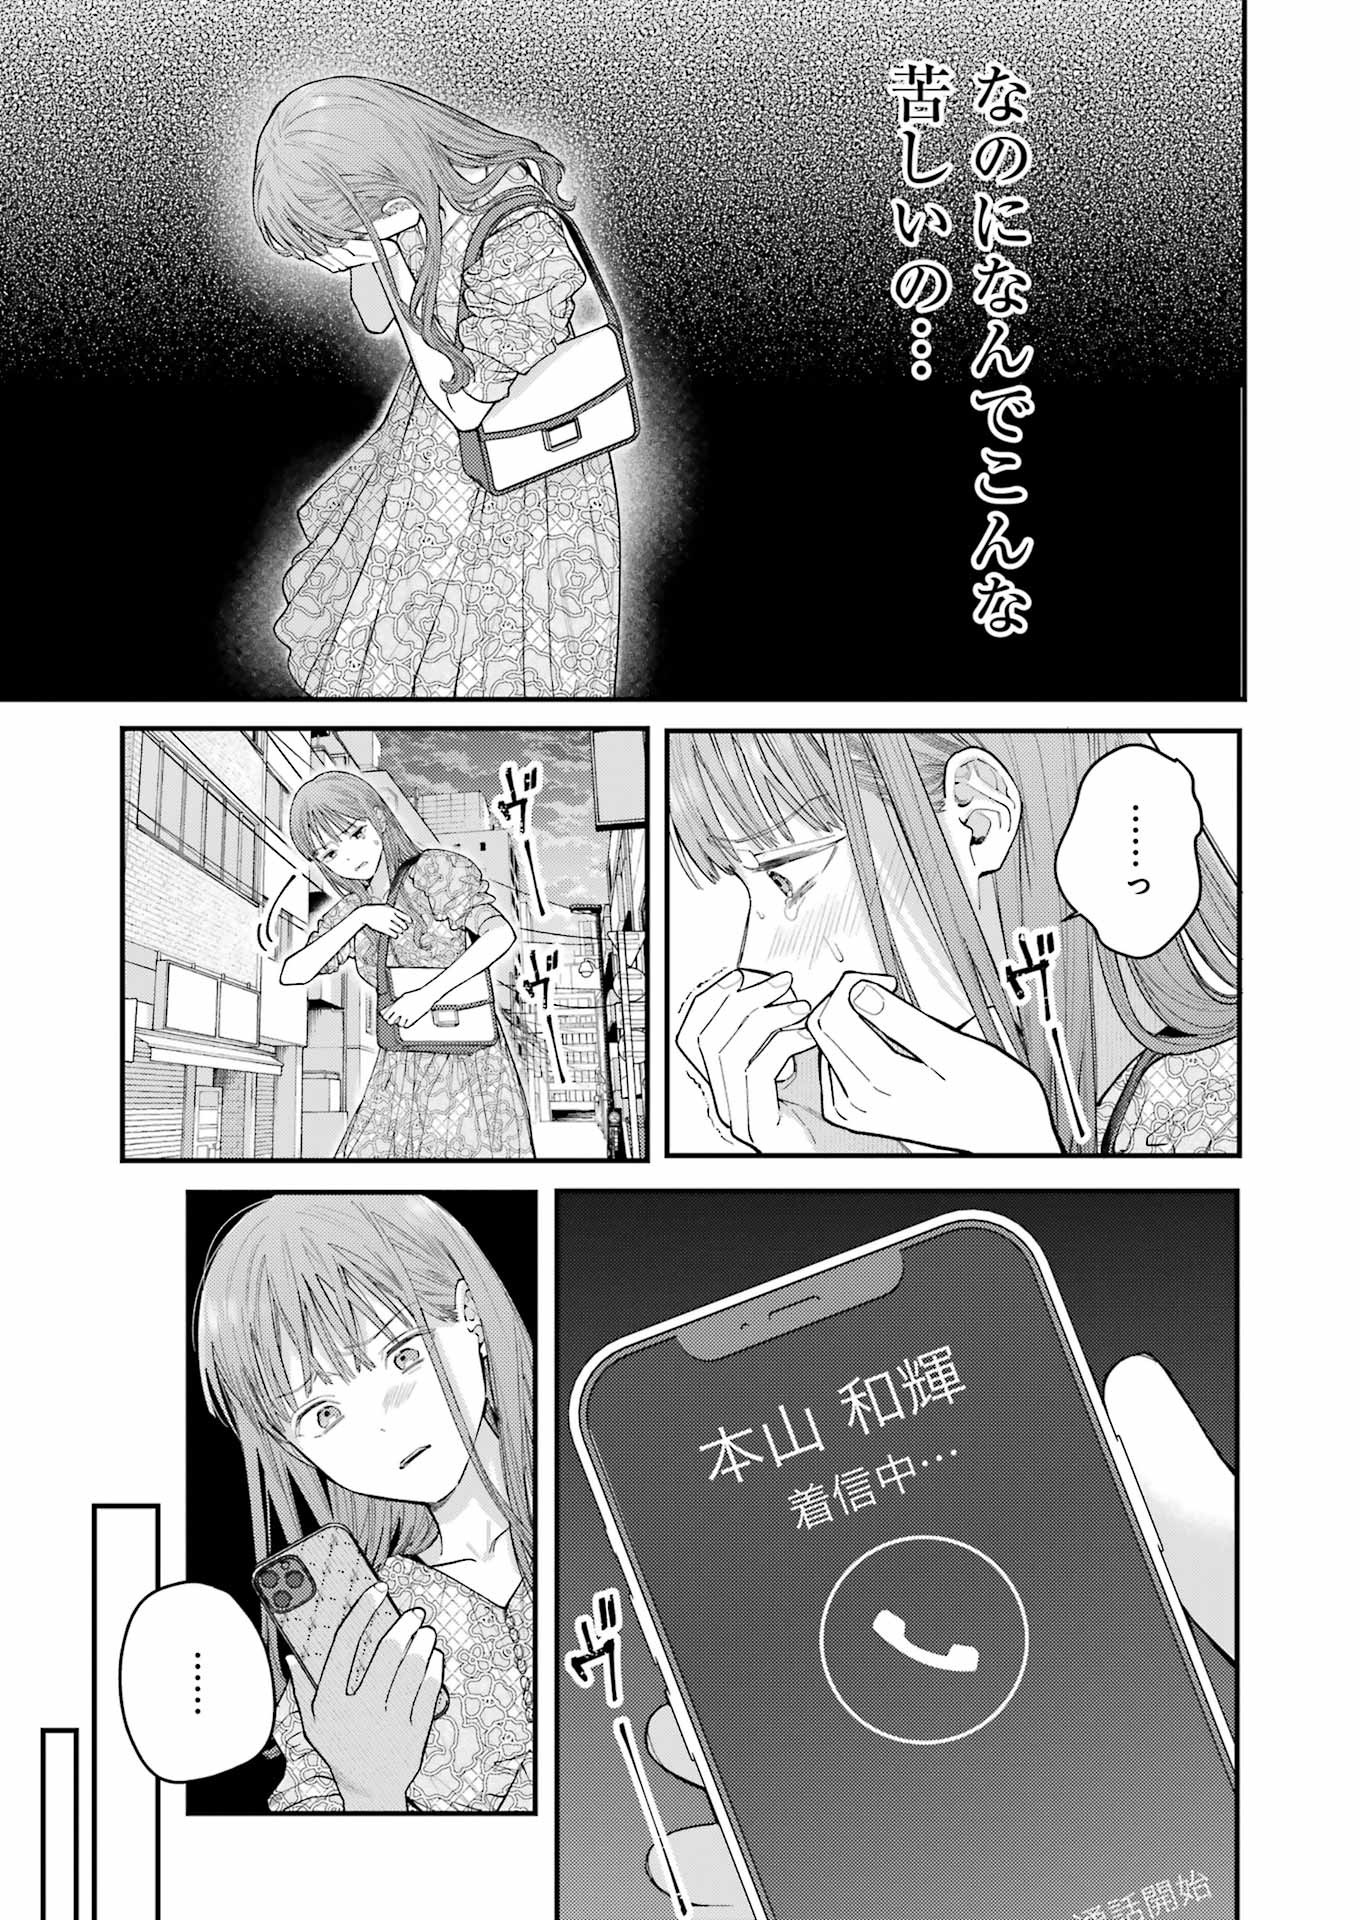 Jigoku ni Ochite yo, Onii-chan - Chapter 27 - Page 3